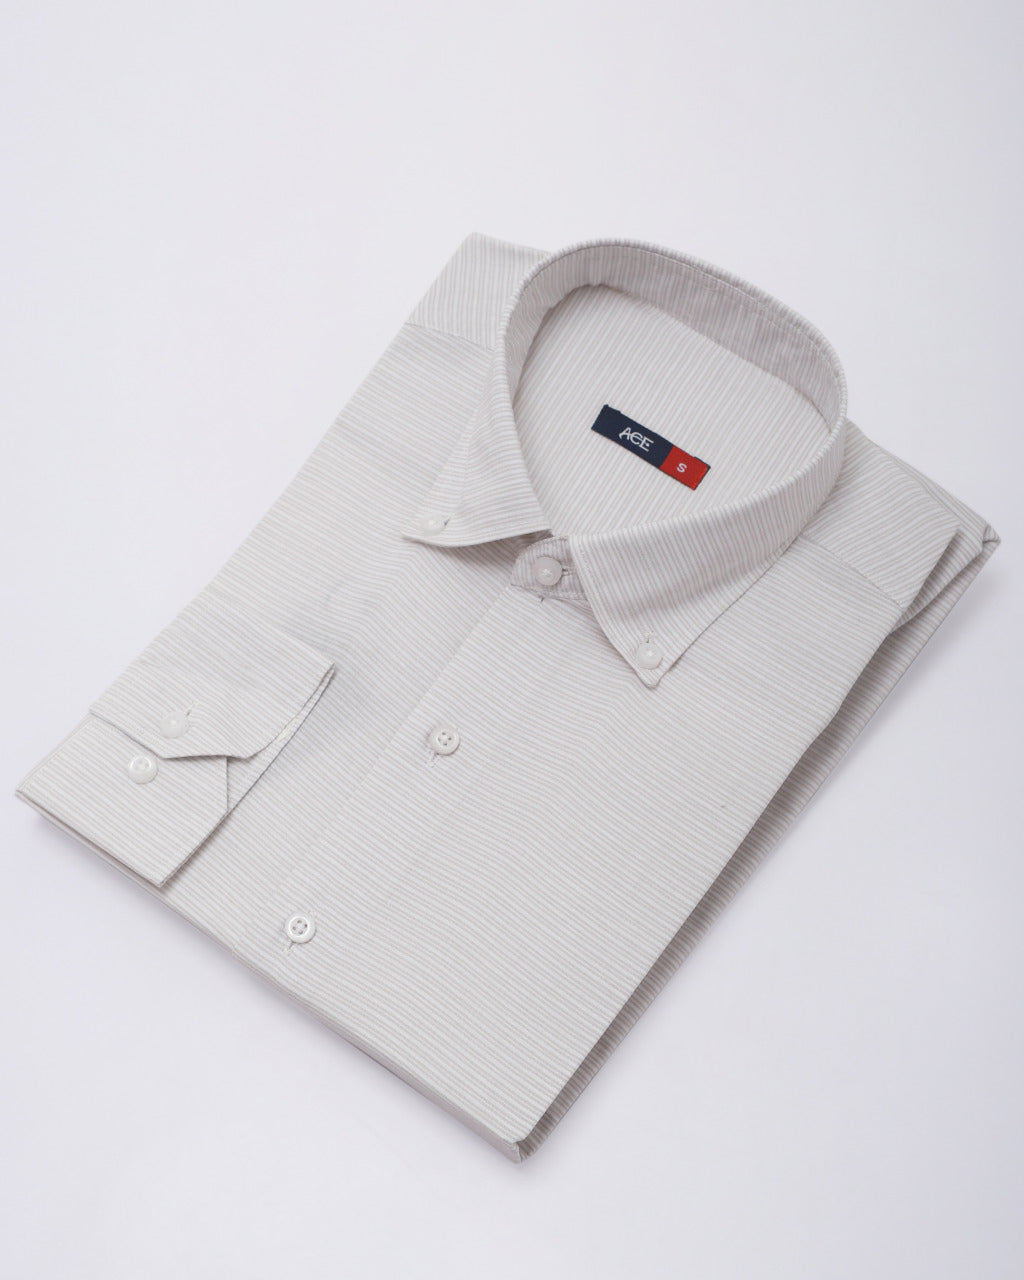 Men's Cream Full Sleeve Casual Shirt - ACE 70101 (S21)